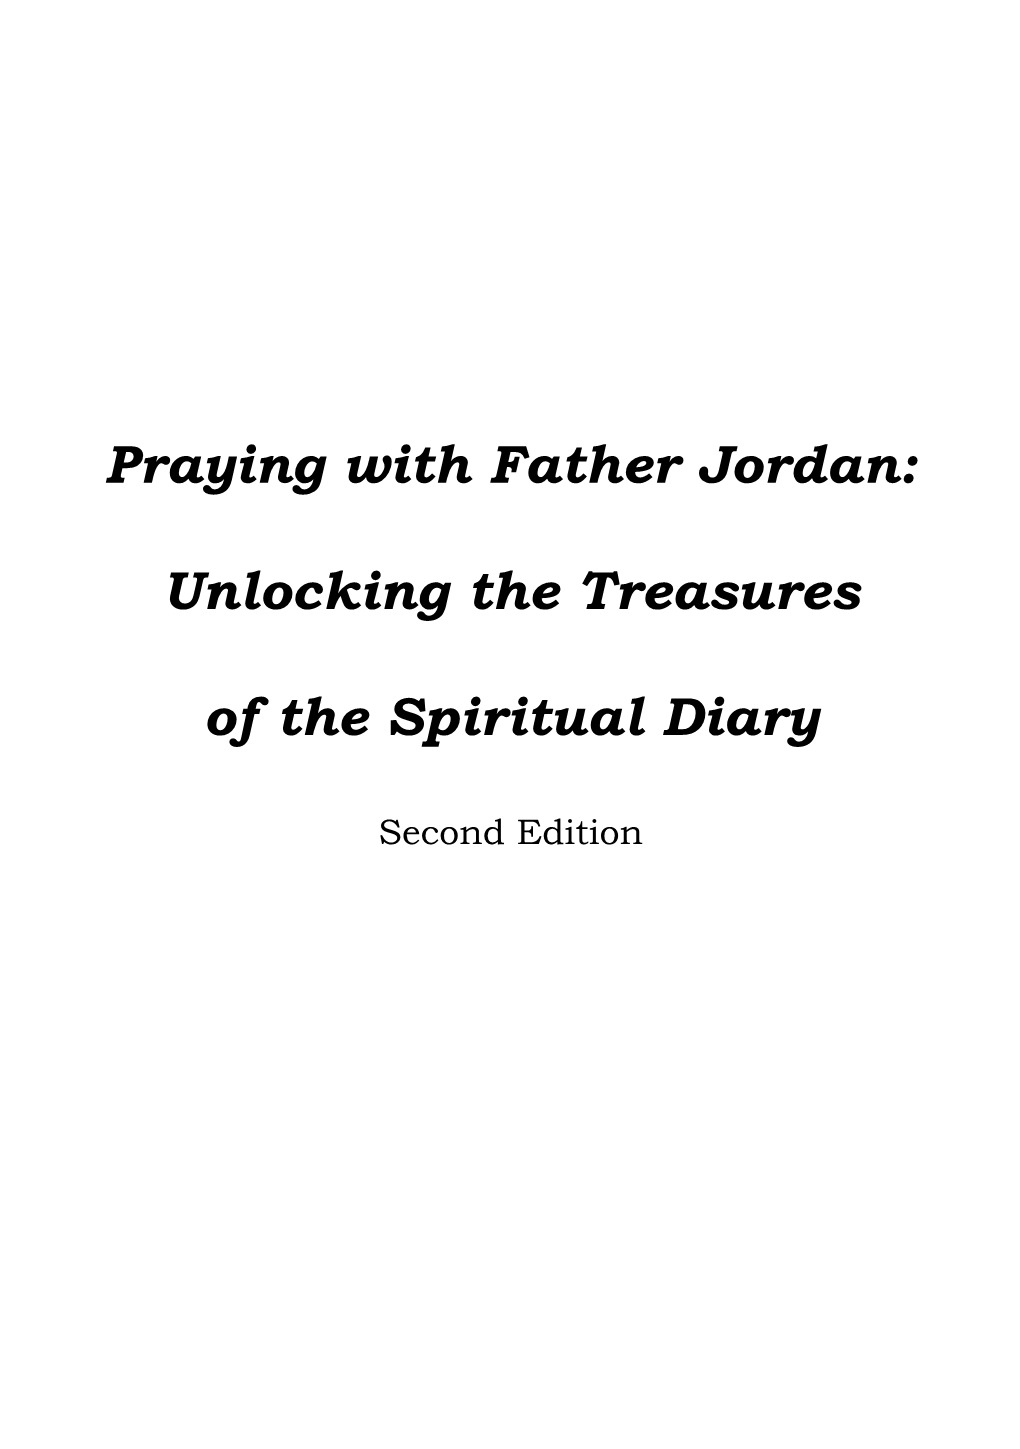 Praying with Father Jordan: Unlocking the Treasures of the Spiritual Diary